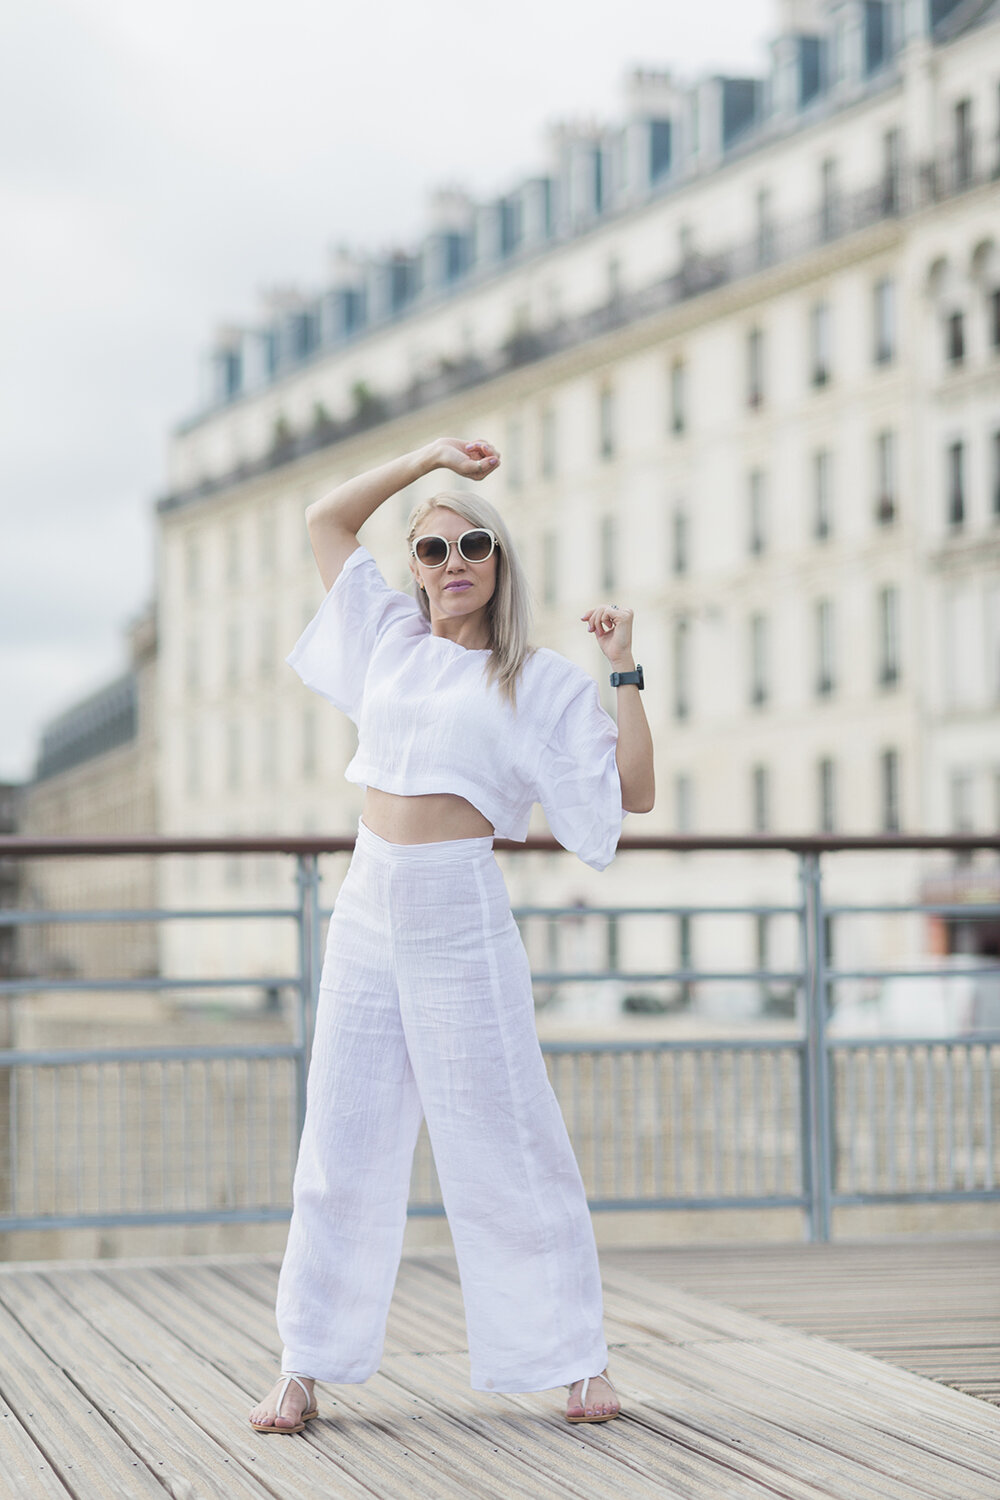 White Lionen Outfit in Paris